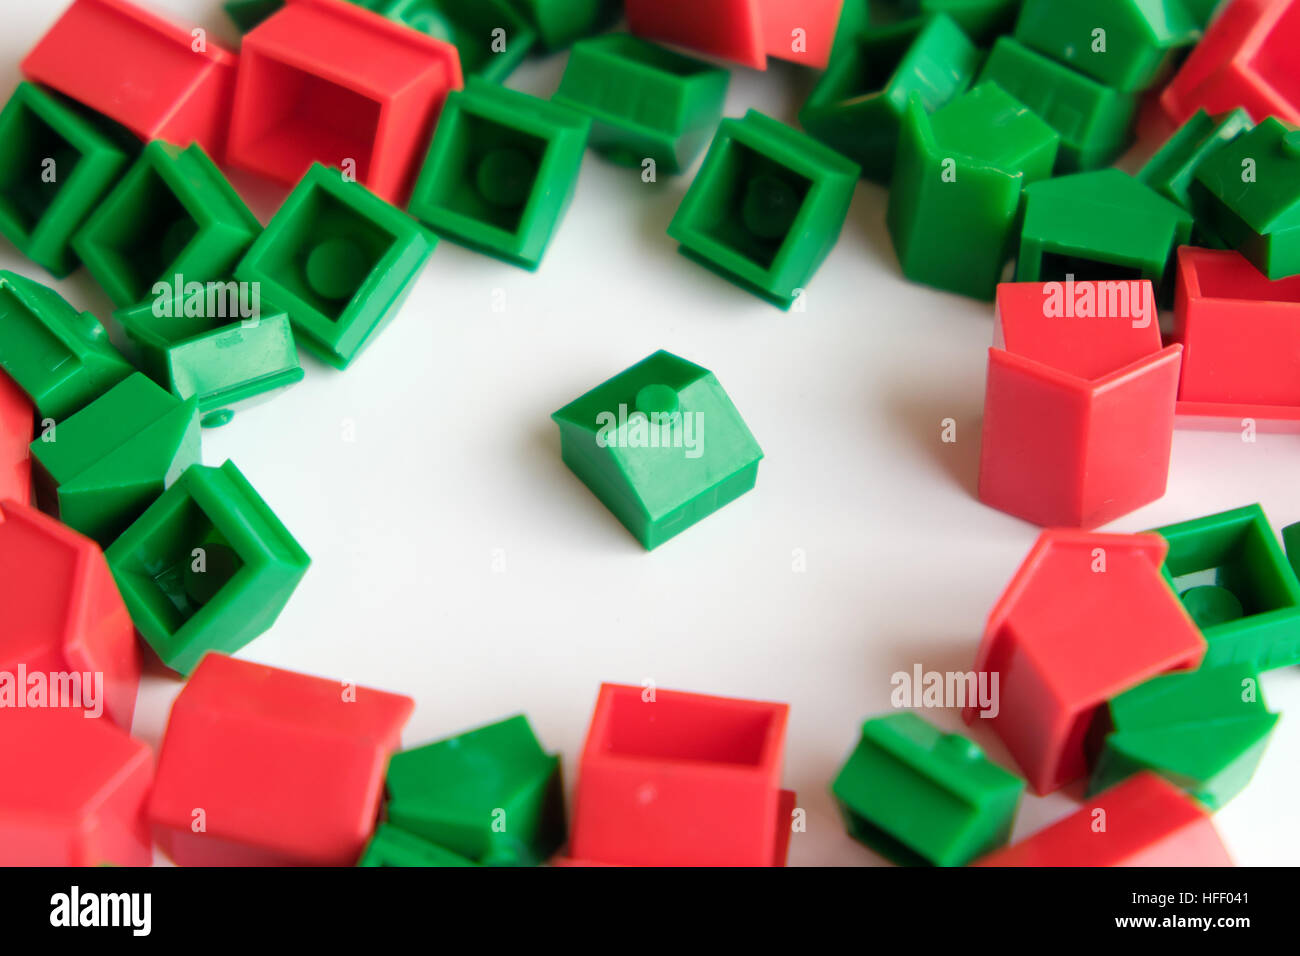 miniature home / house - housing market concept Stock Photo